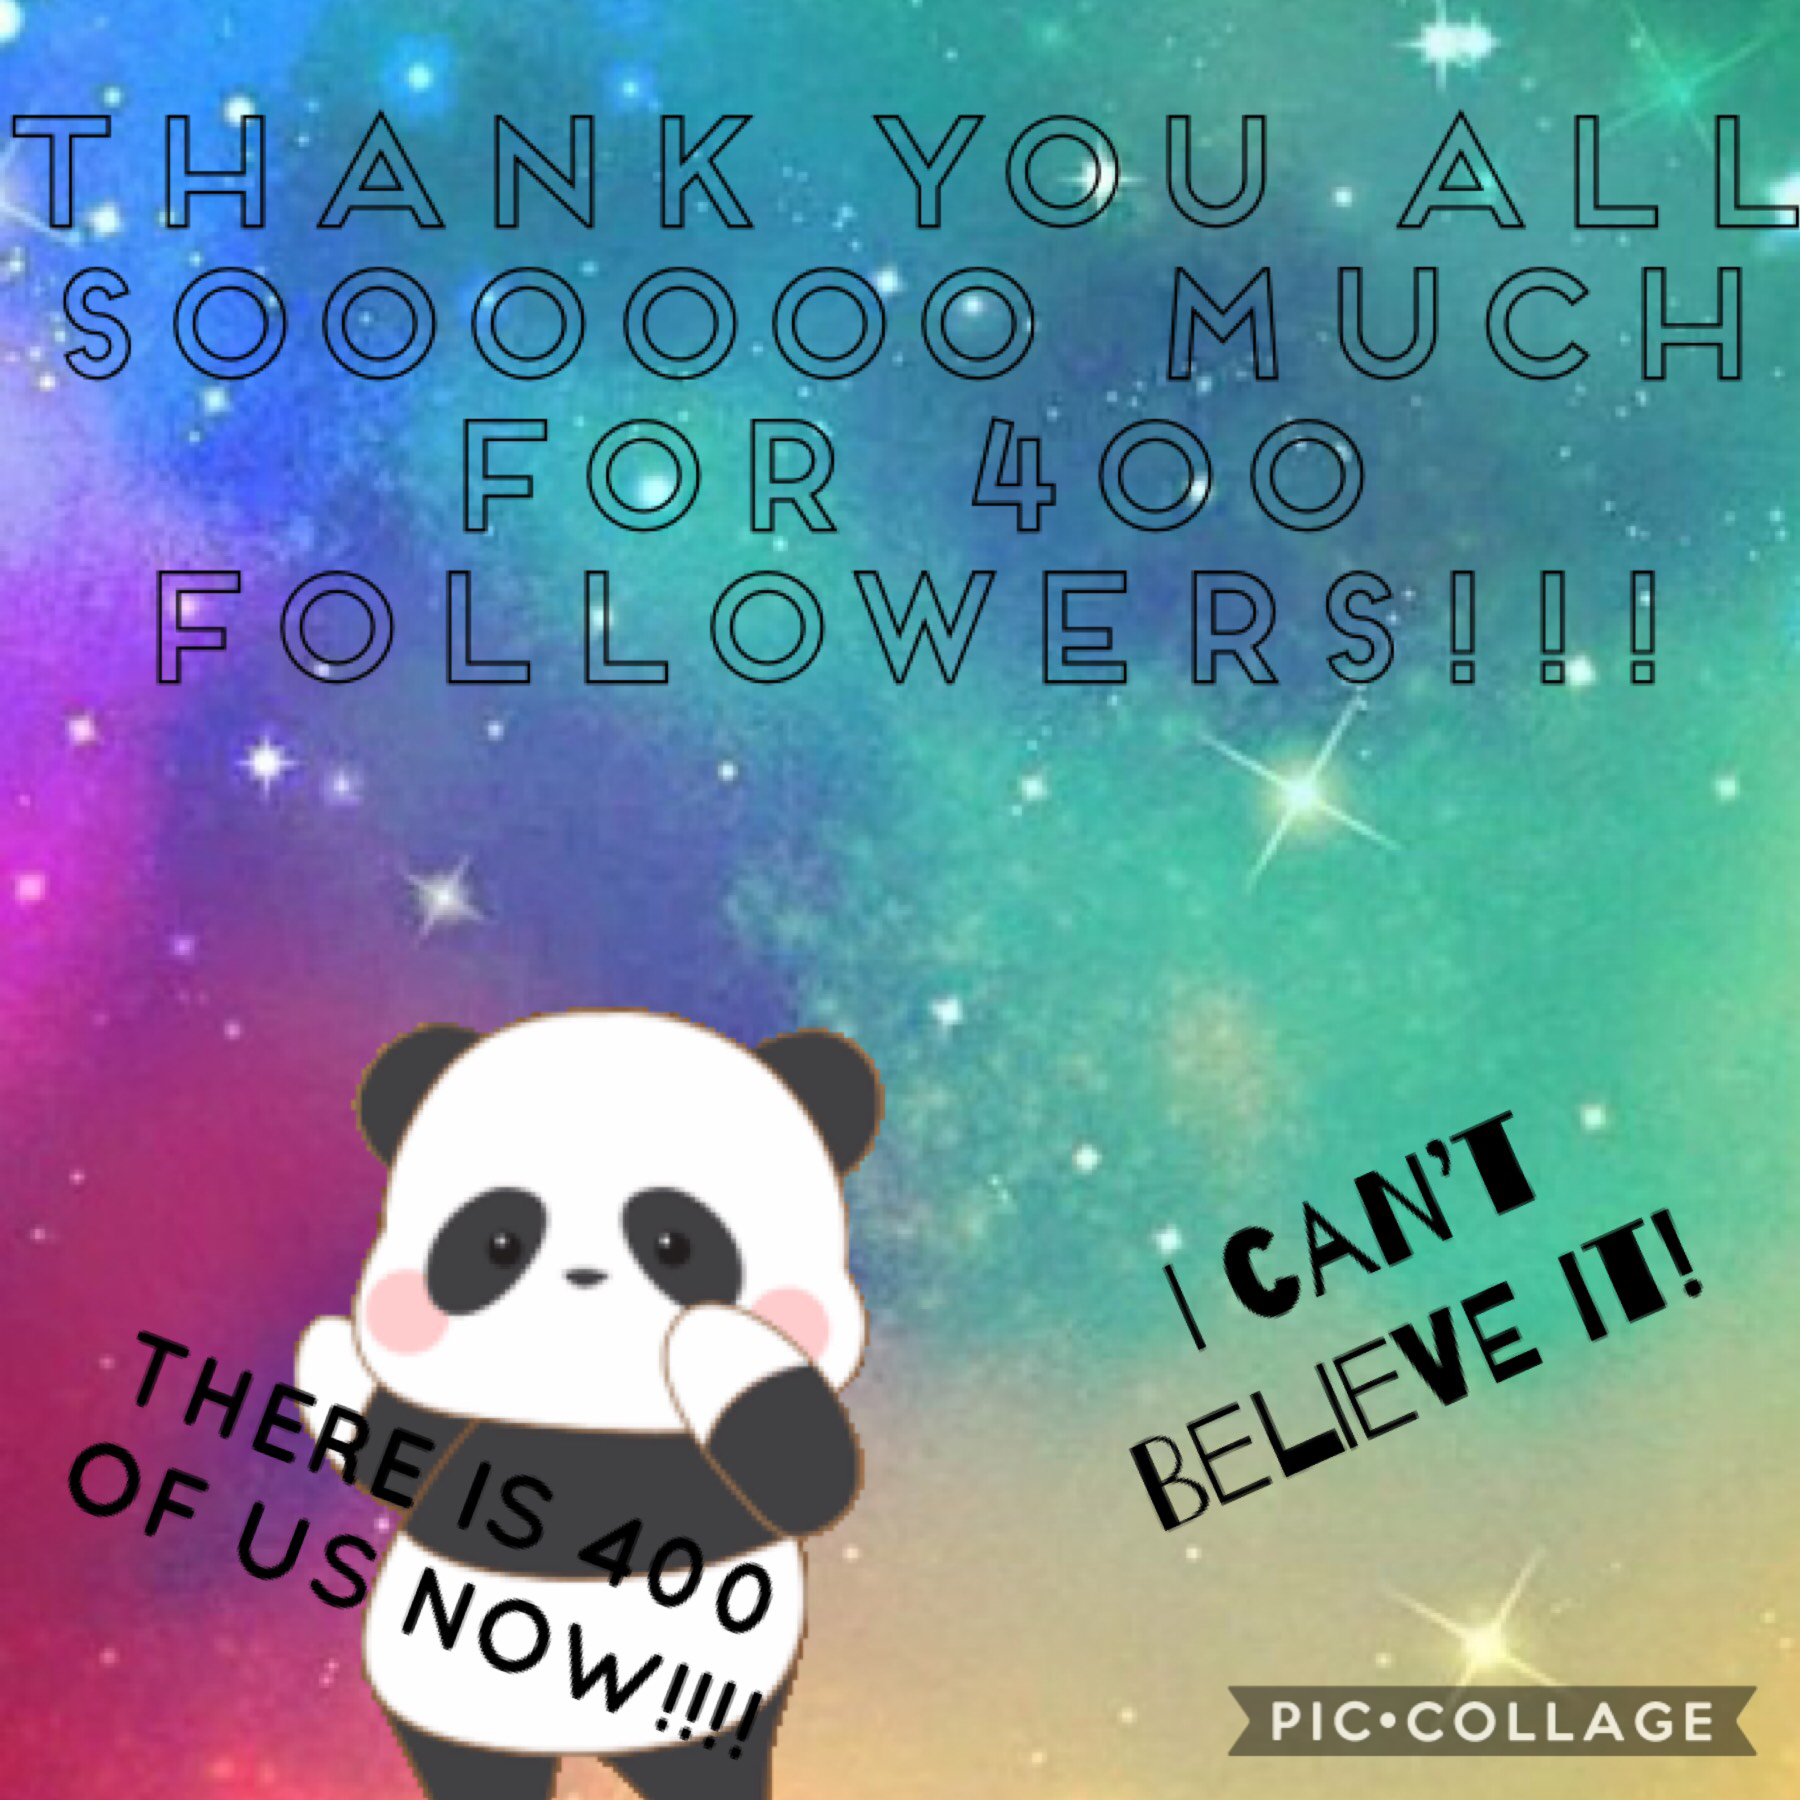 400 followers! Woo 